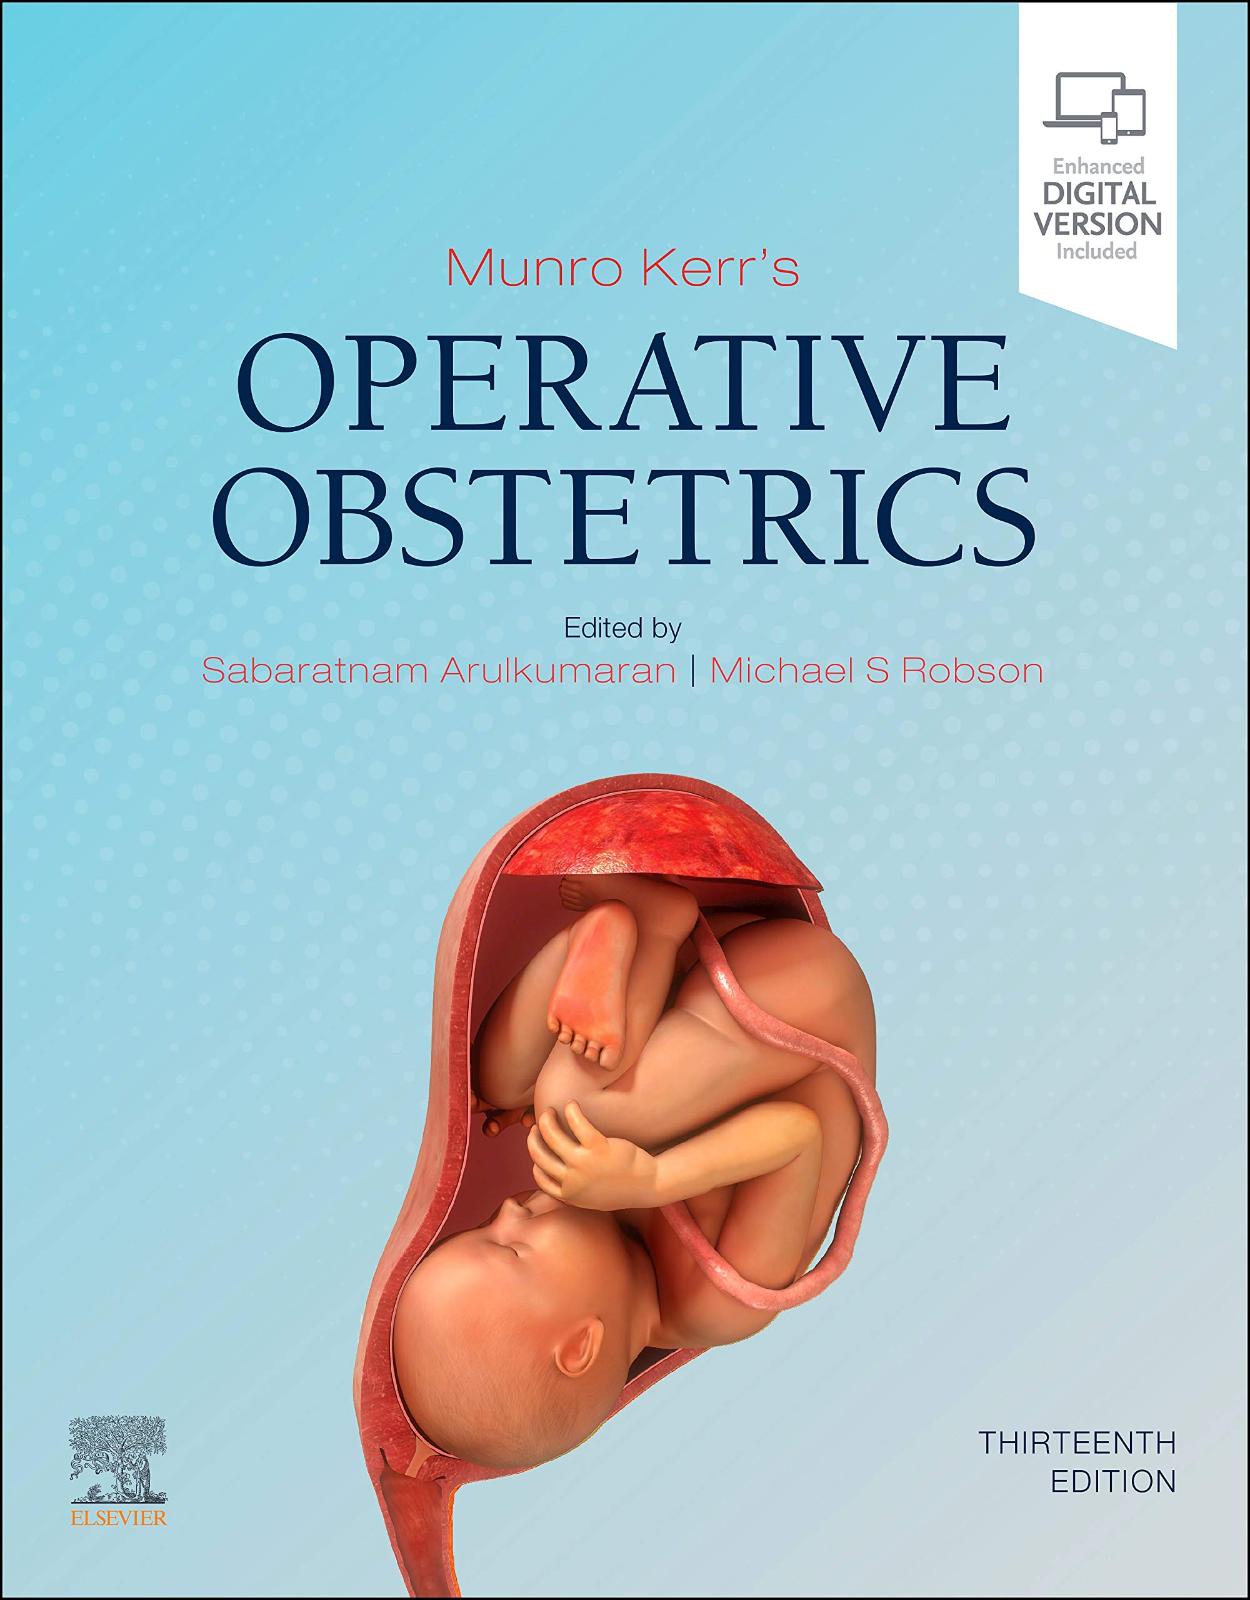 Munro Kerr’s Operative Obstetrics, 13th edition